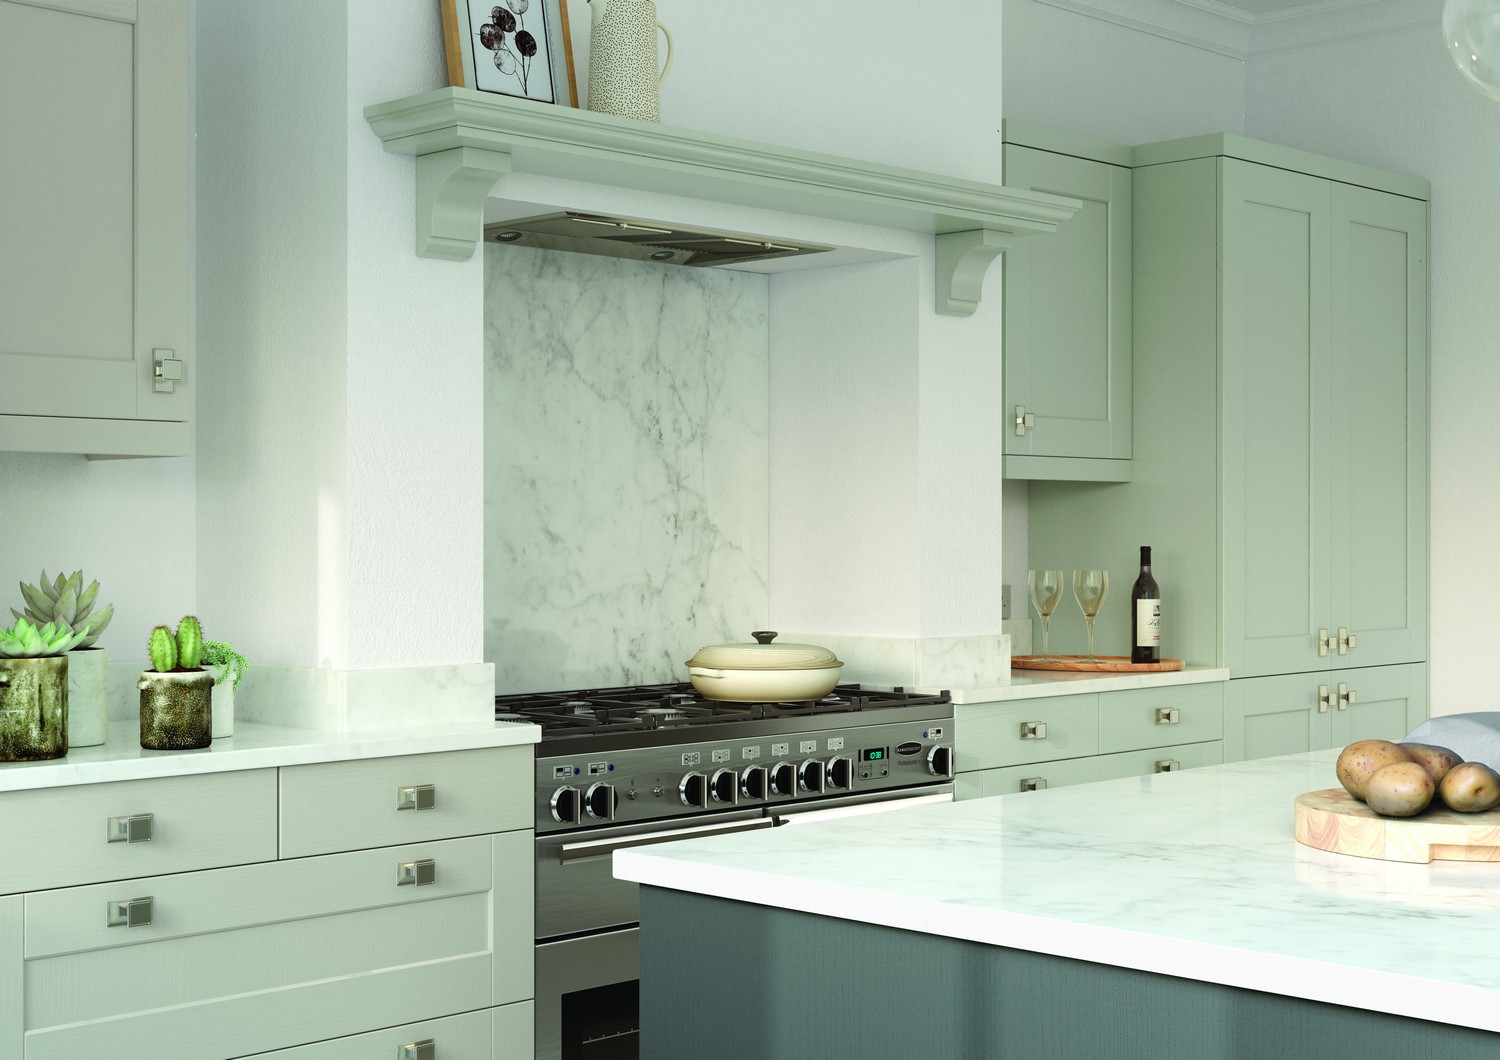 Painted shaker kitchen design with Corian worktops.